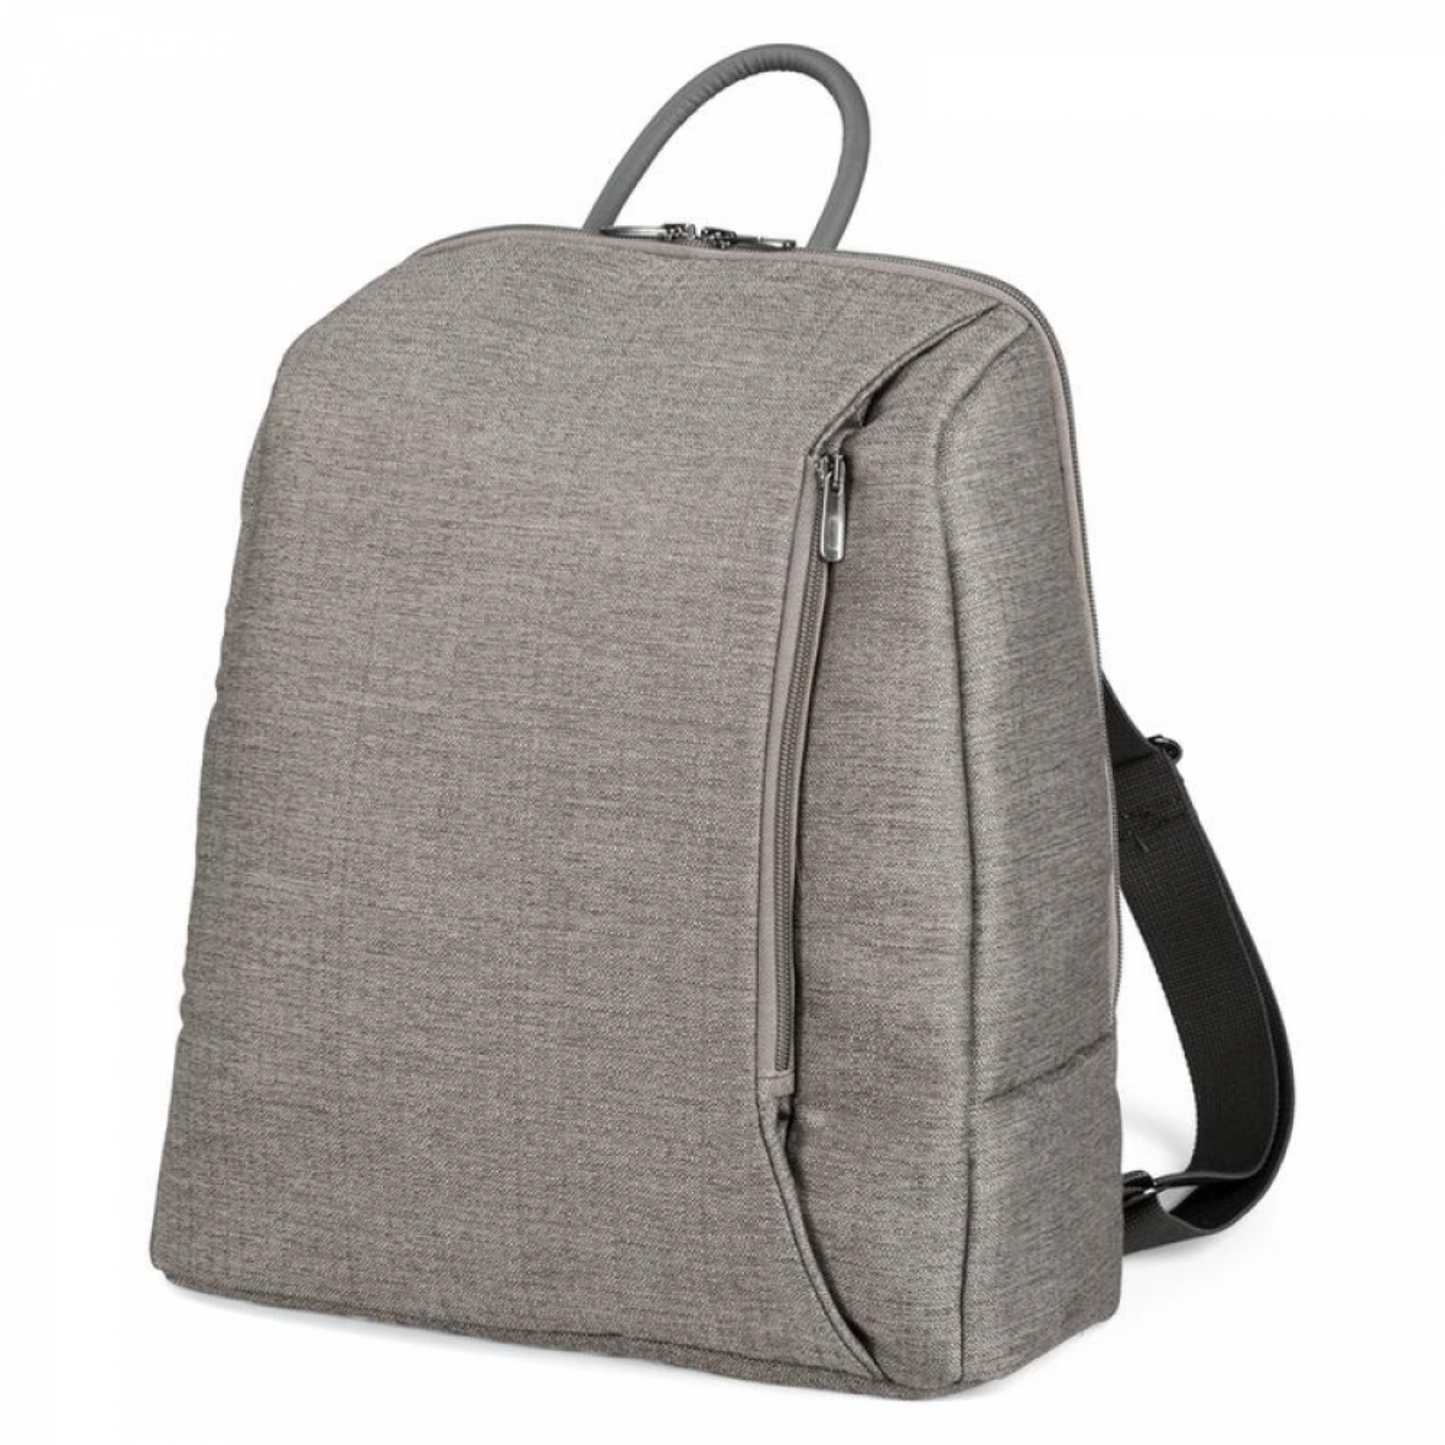 Peg Perego Backpack Changing Bag City Grey